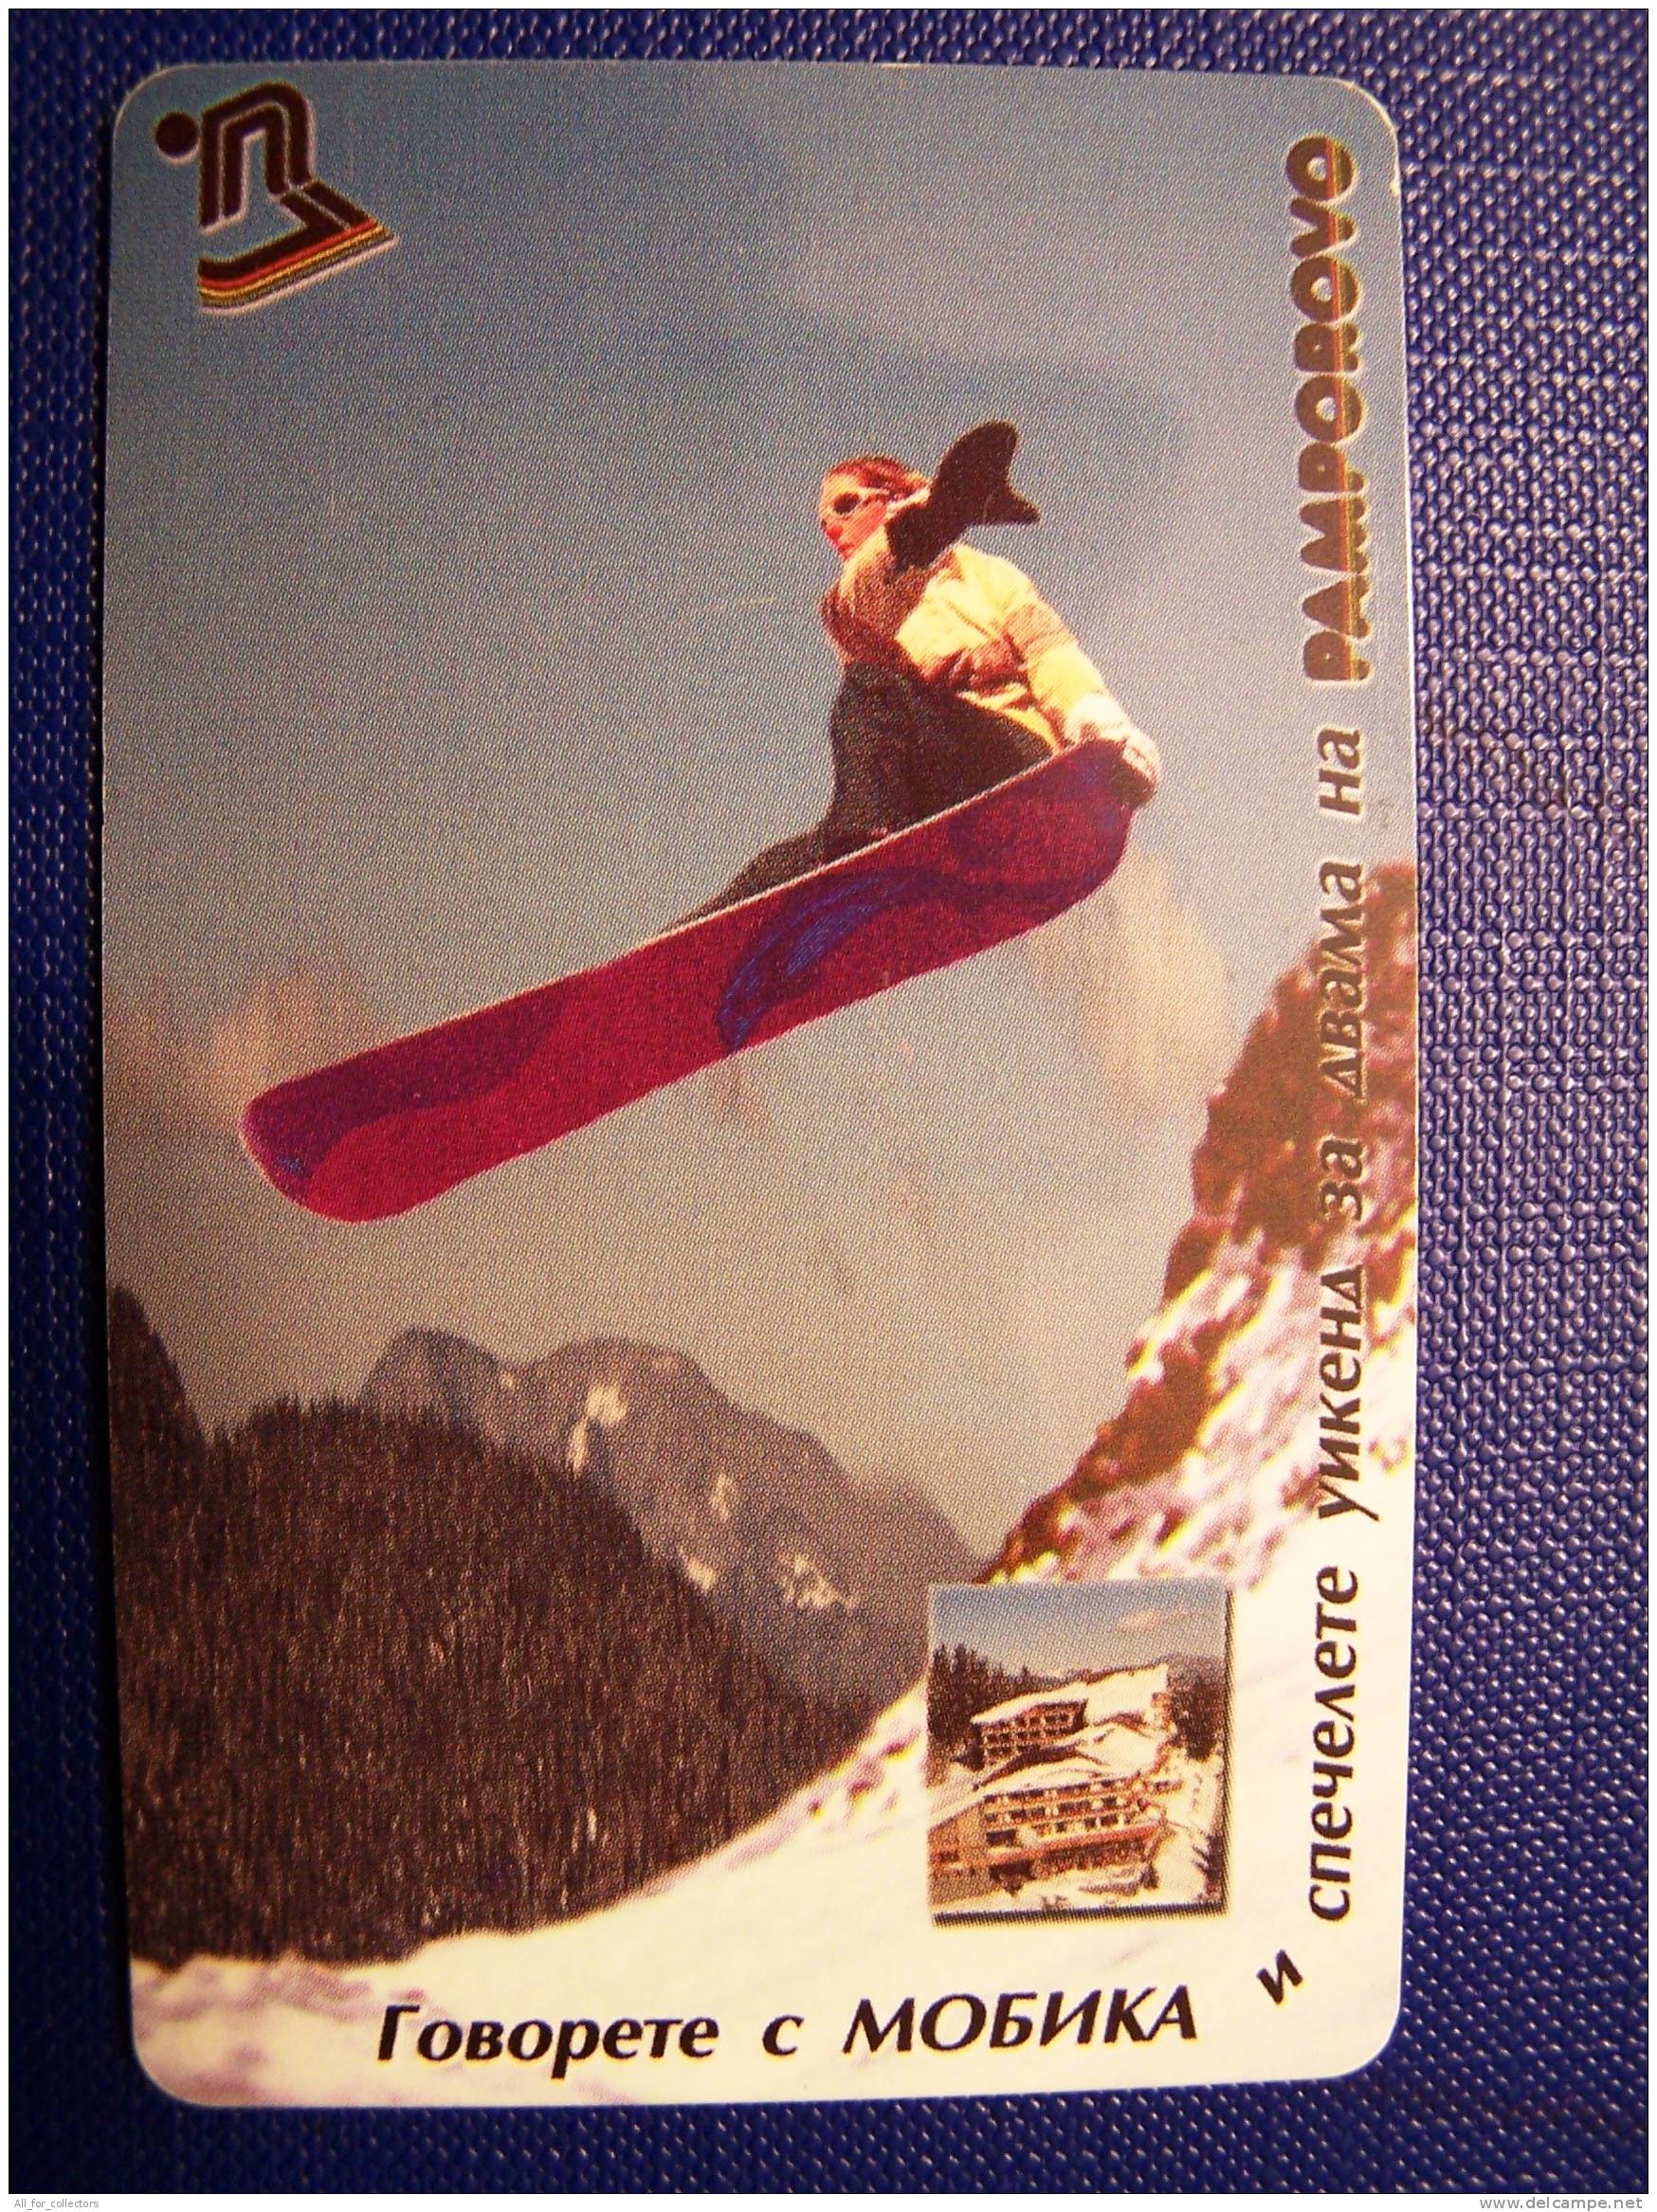 Mountains, Sport, Bulgaria Chip Phone Card, Mobika, Snowboard, - Bergen